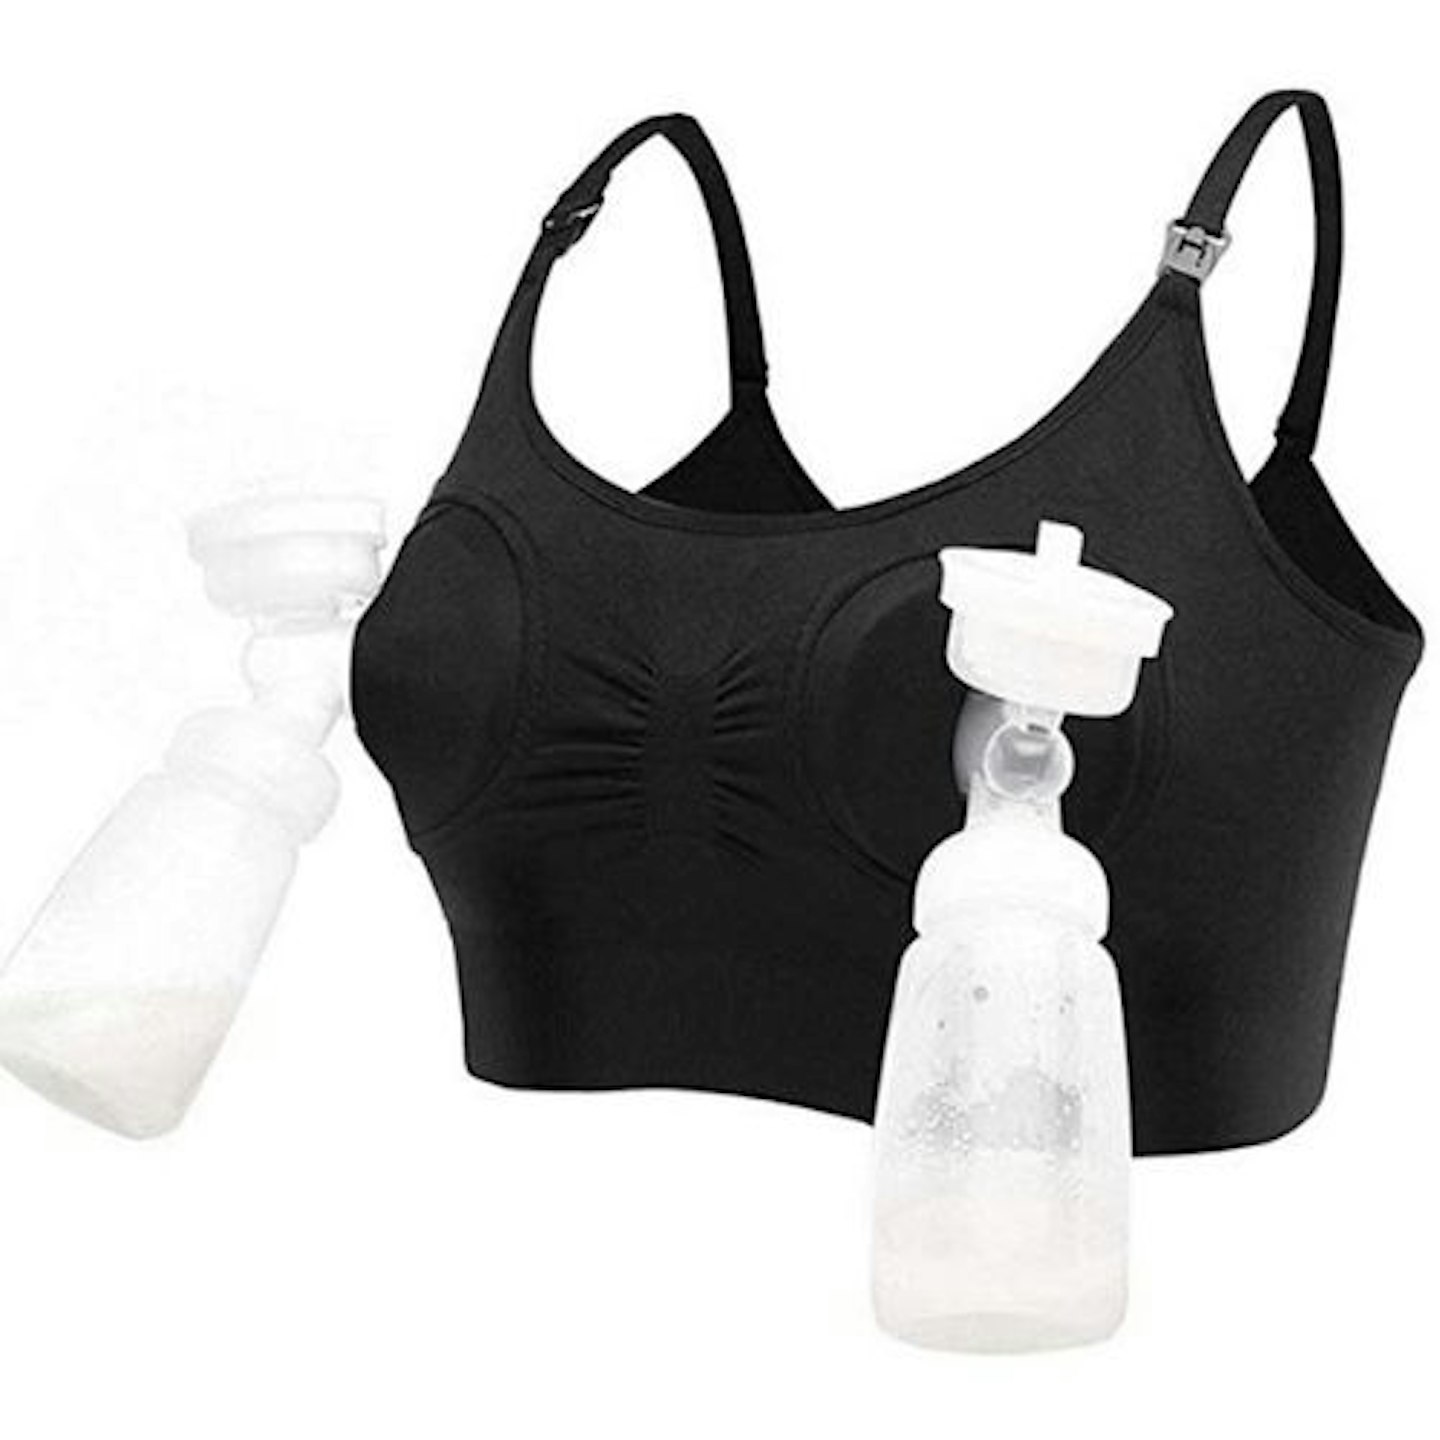 Best pumping bra Springcmy Women Hands-Free Breast Pump Bra